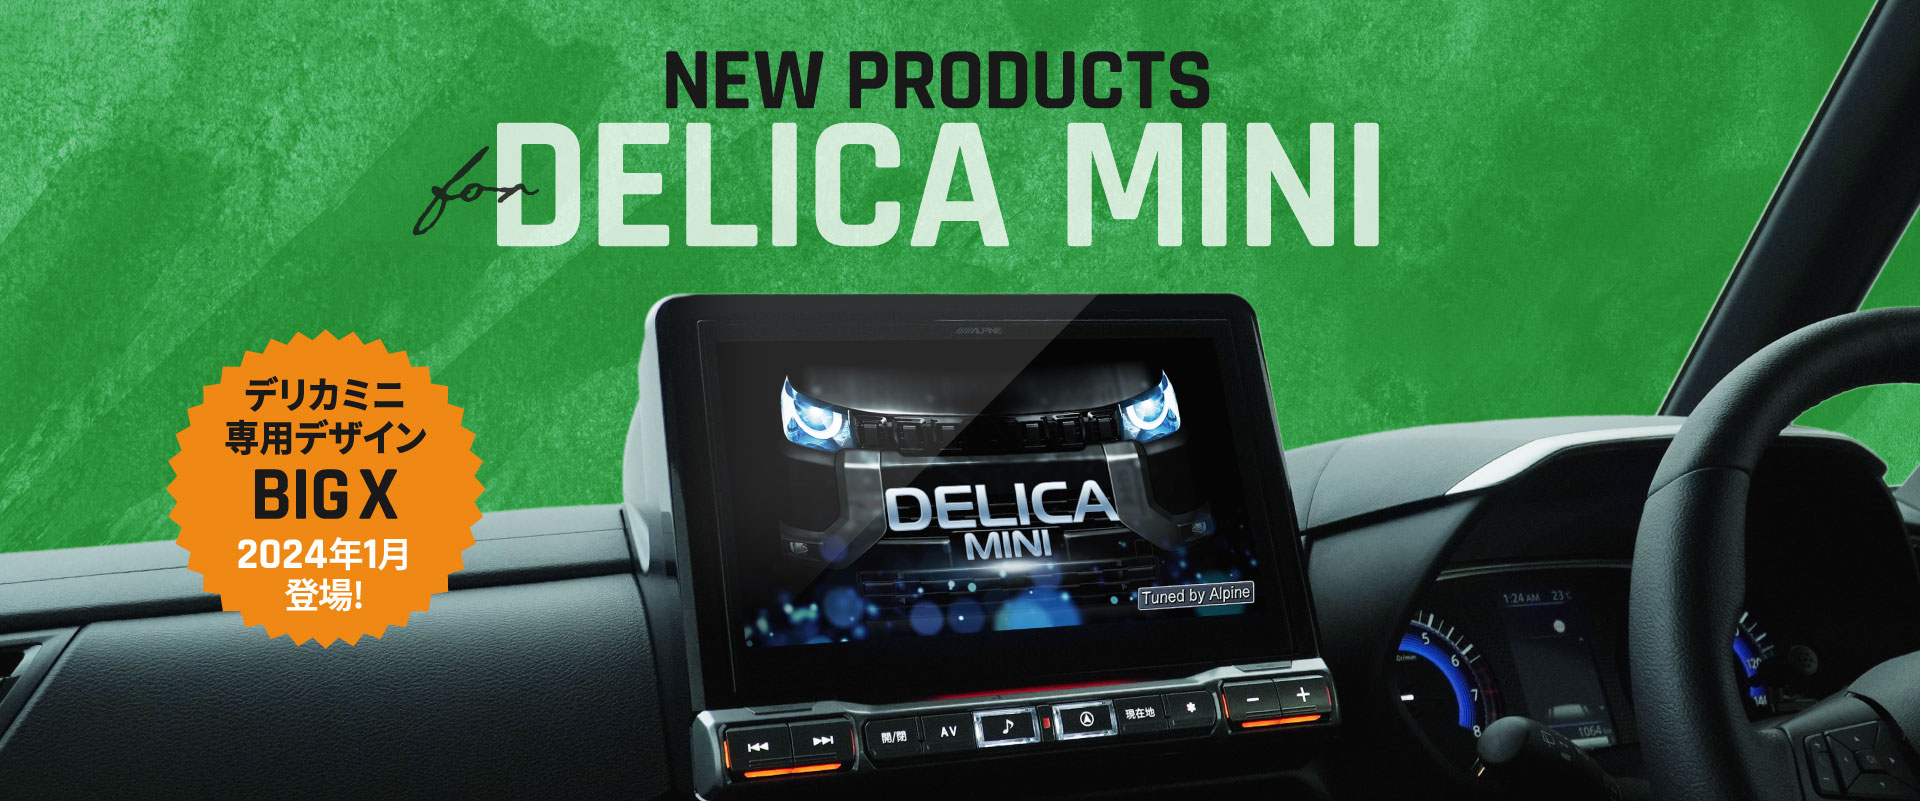 NEW PRODUCTS for DELICA MINI │ アルパイン製品でデリカミニをアップデート デリカミニ専用デザイン BIG X 2024年登場！